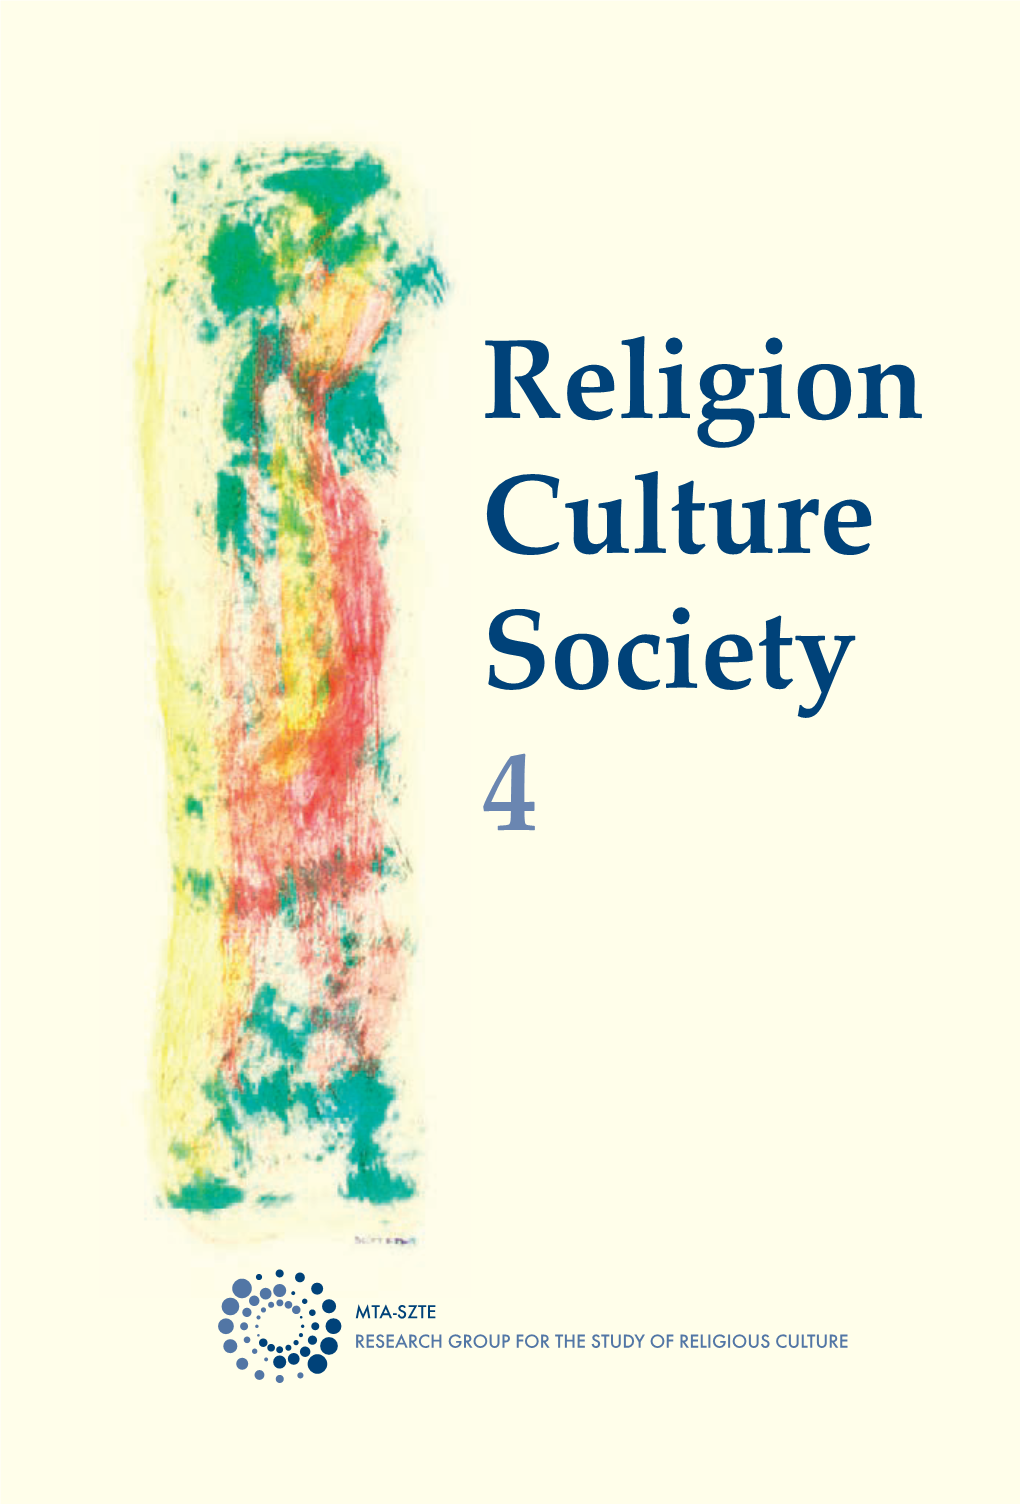 SZTE Religion Culture Society 4 Beliv V4.Indd